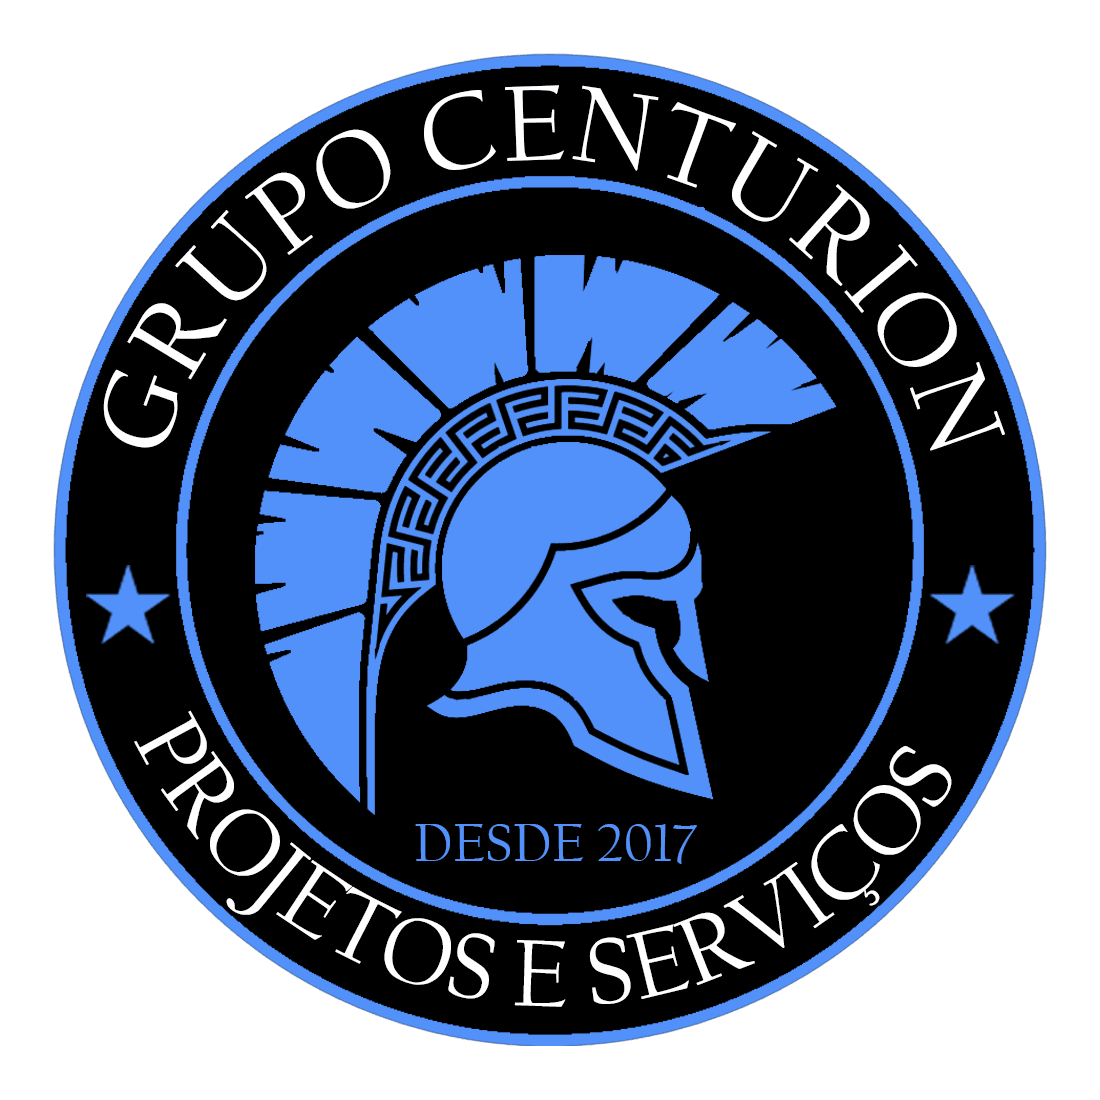 Grupo Centurion